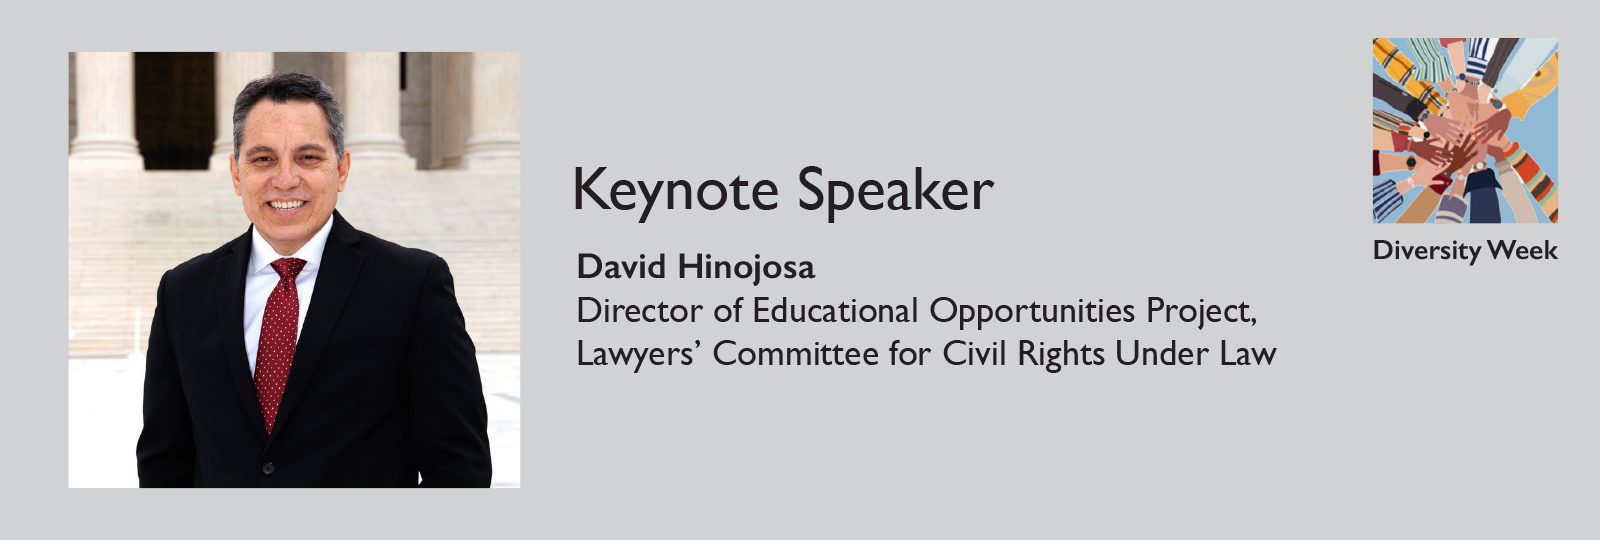 David Hinojosa Keynote Speaker